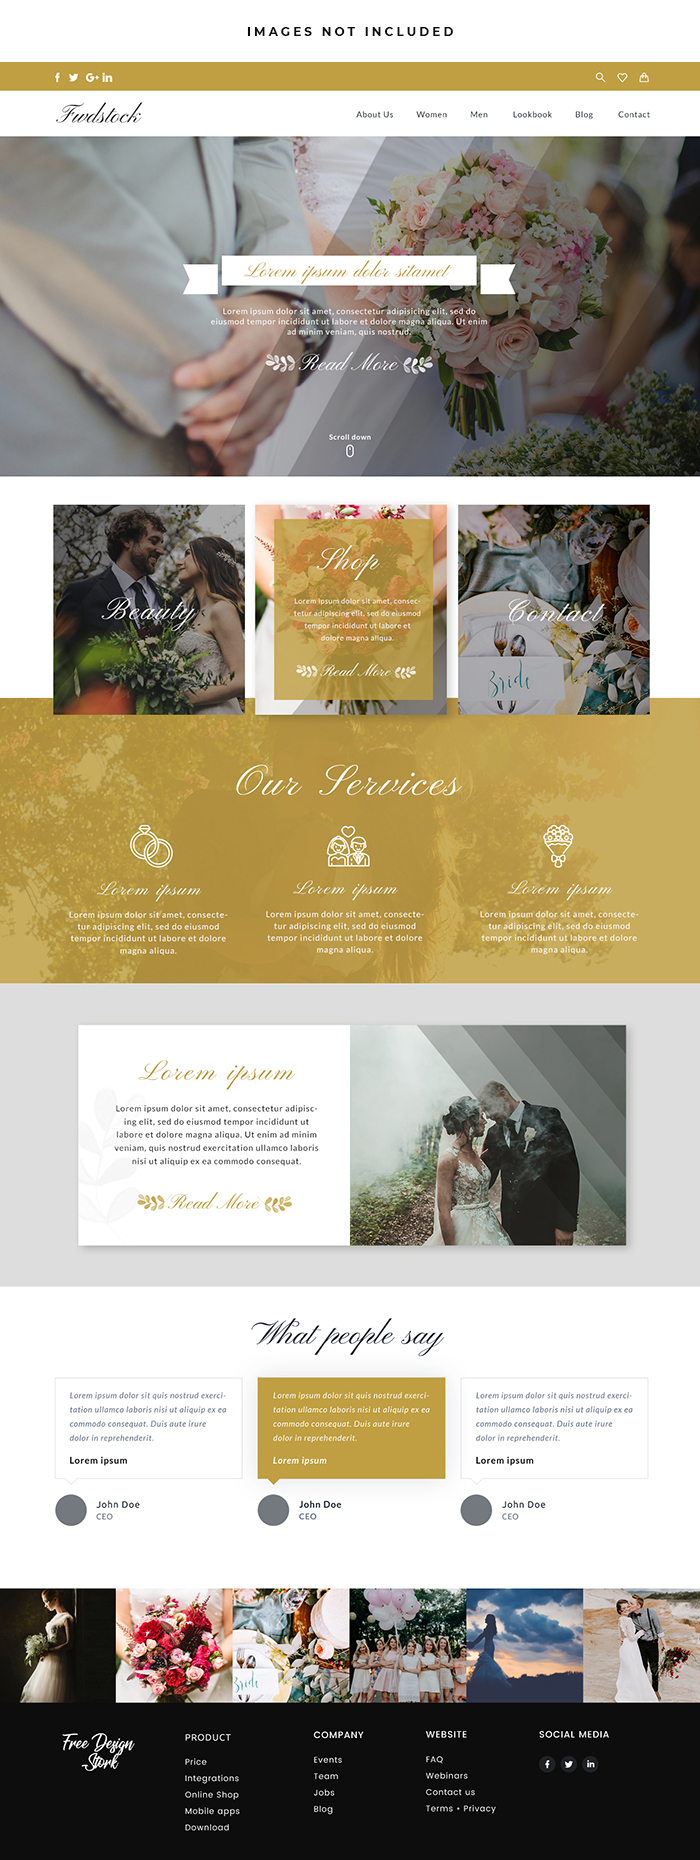 Wedding website blog